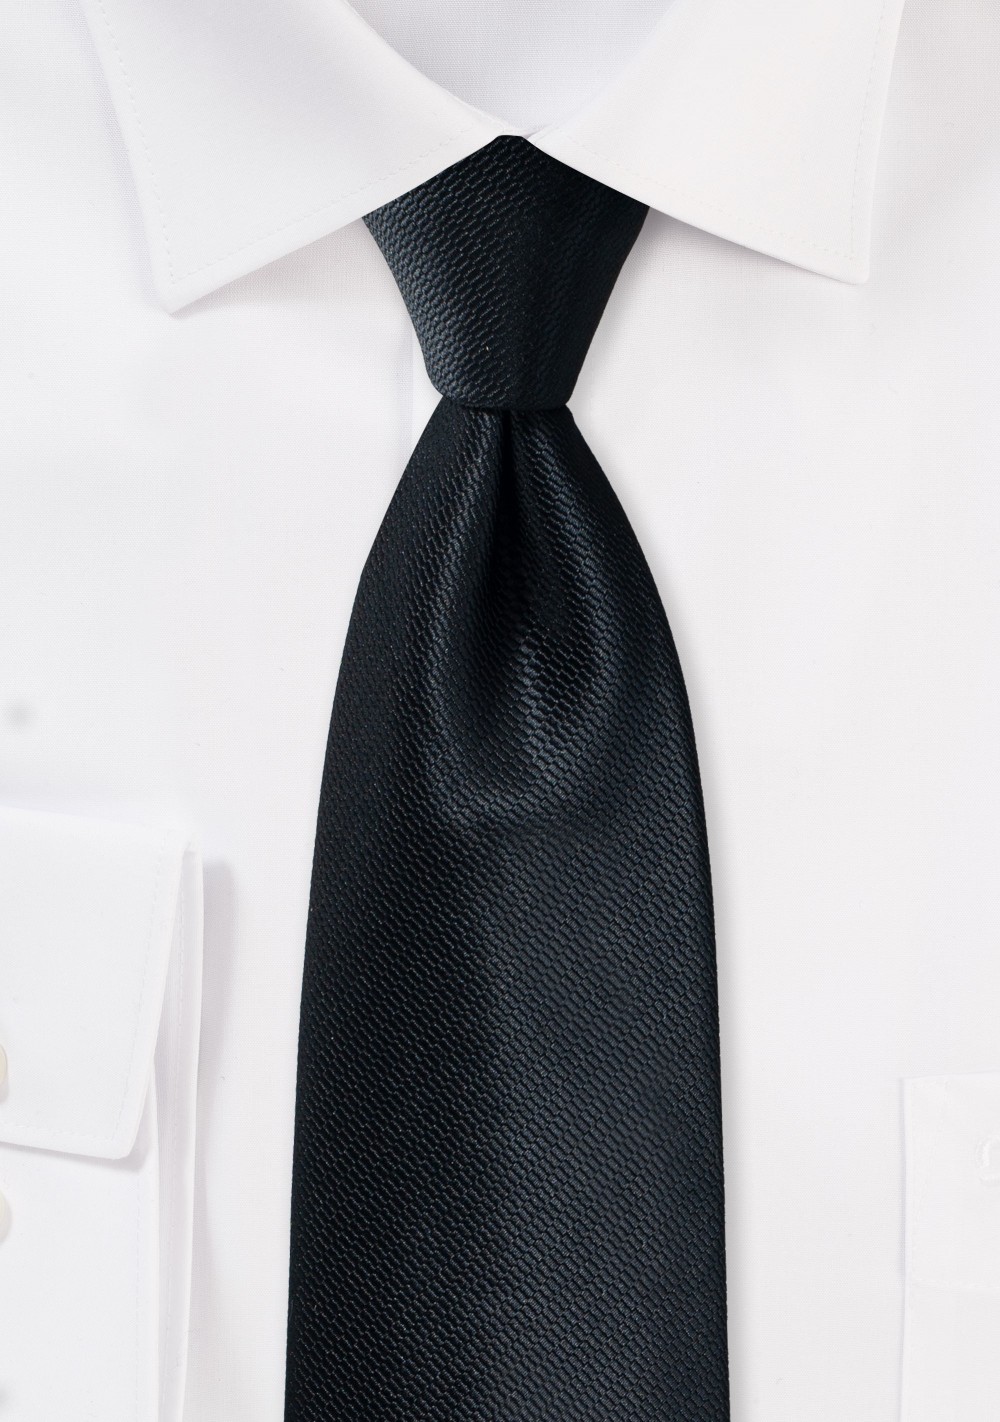 Textured Formal Black Mens Tie